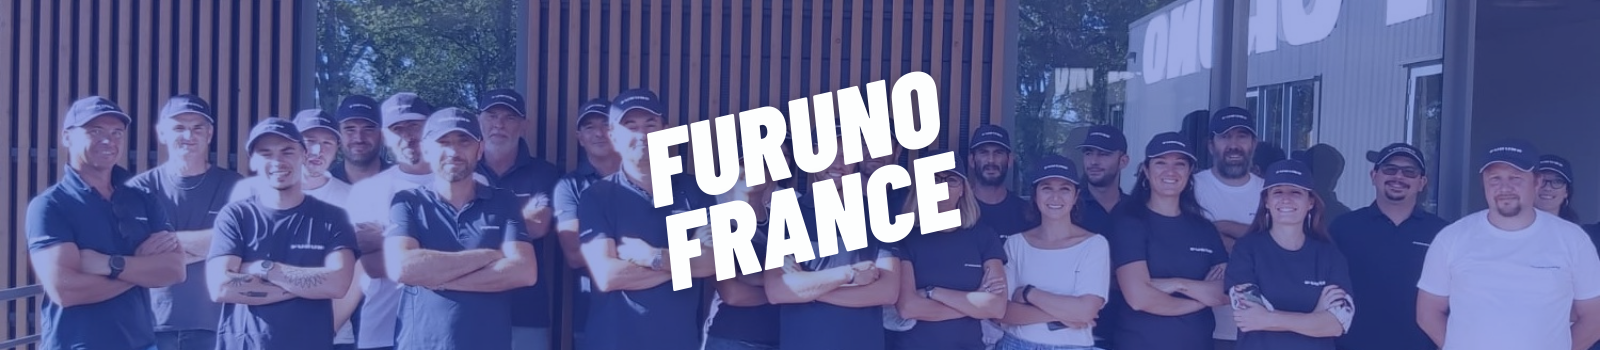 FURUNO FRANCE TEAM